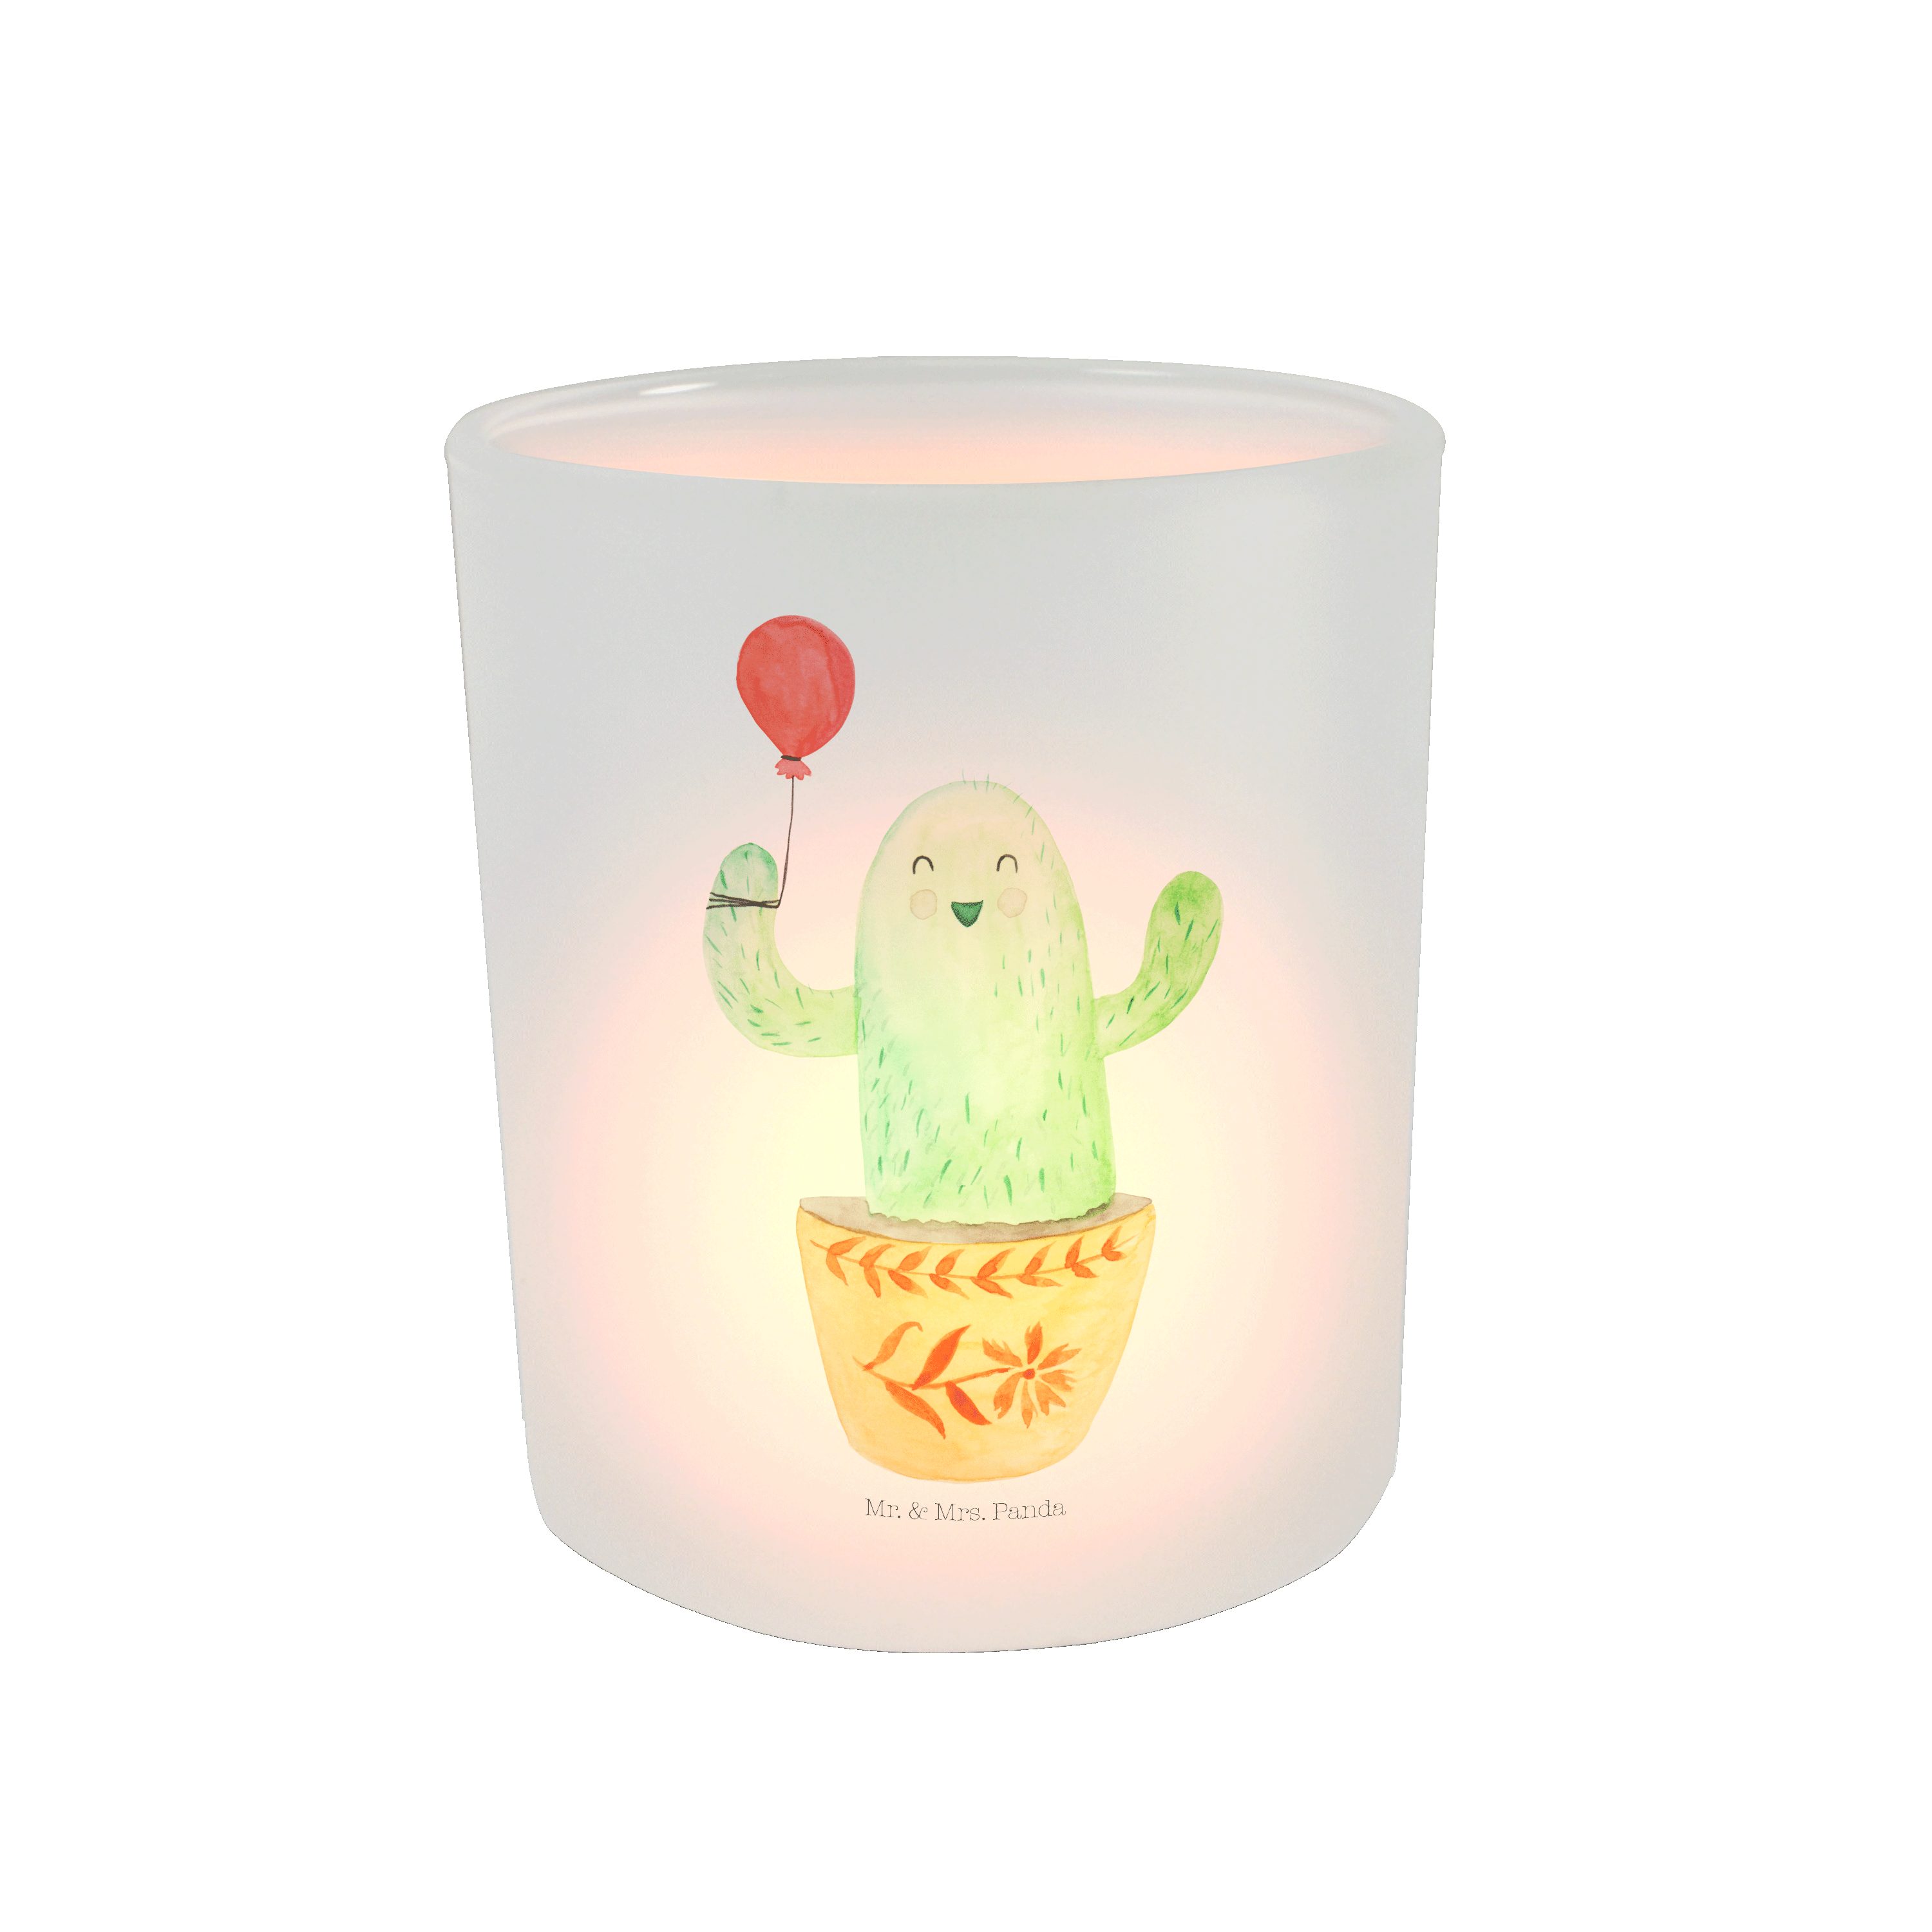 Mr. & Mrs. Panda Windlicht Kaktus Luftballon - Transparent - Geschenk, Kerzenlicht, Büro, Teelic (1 St)